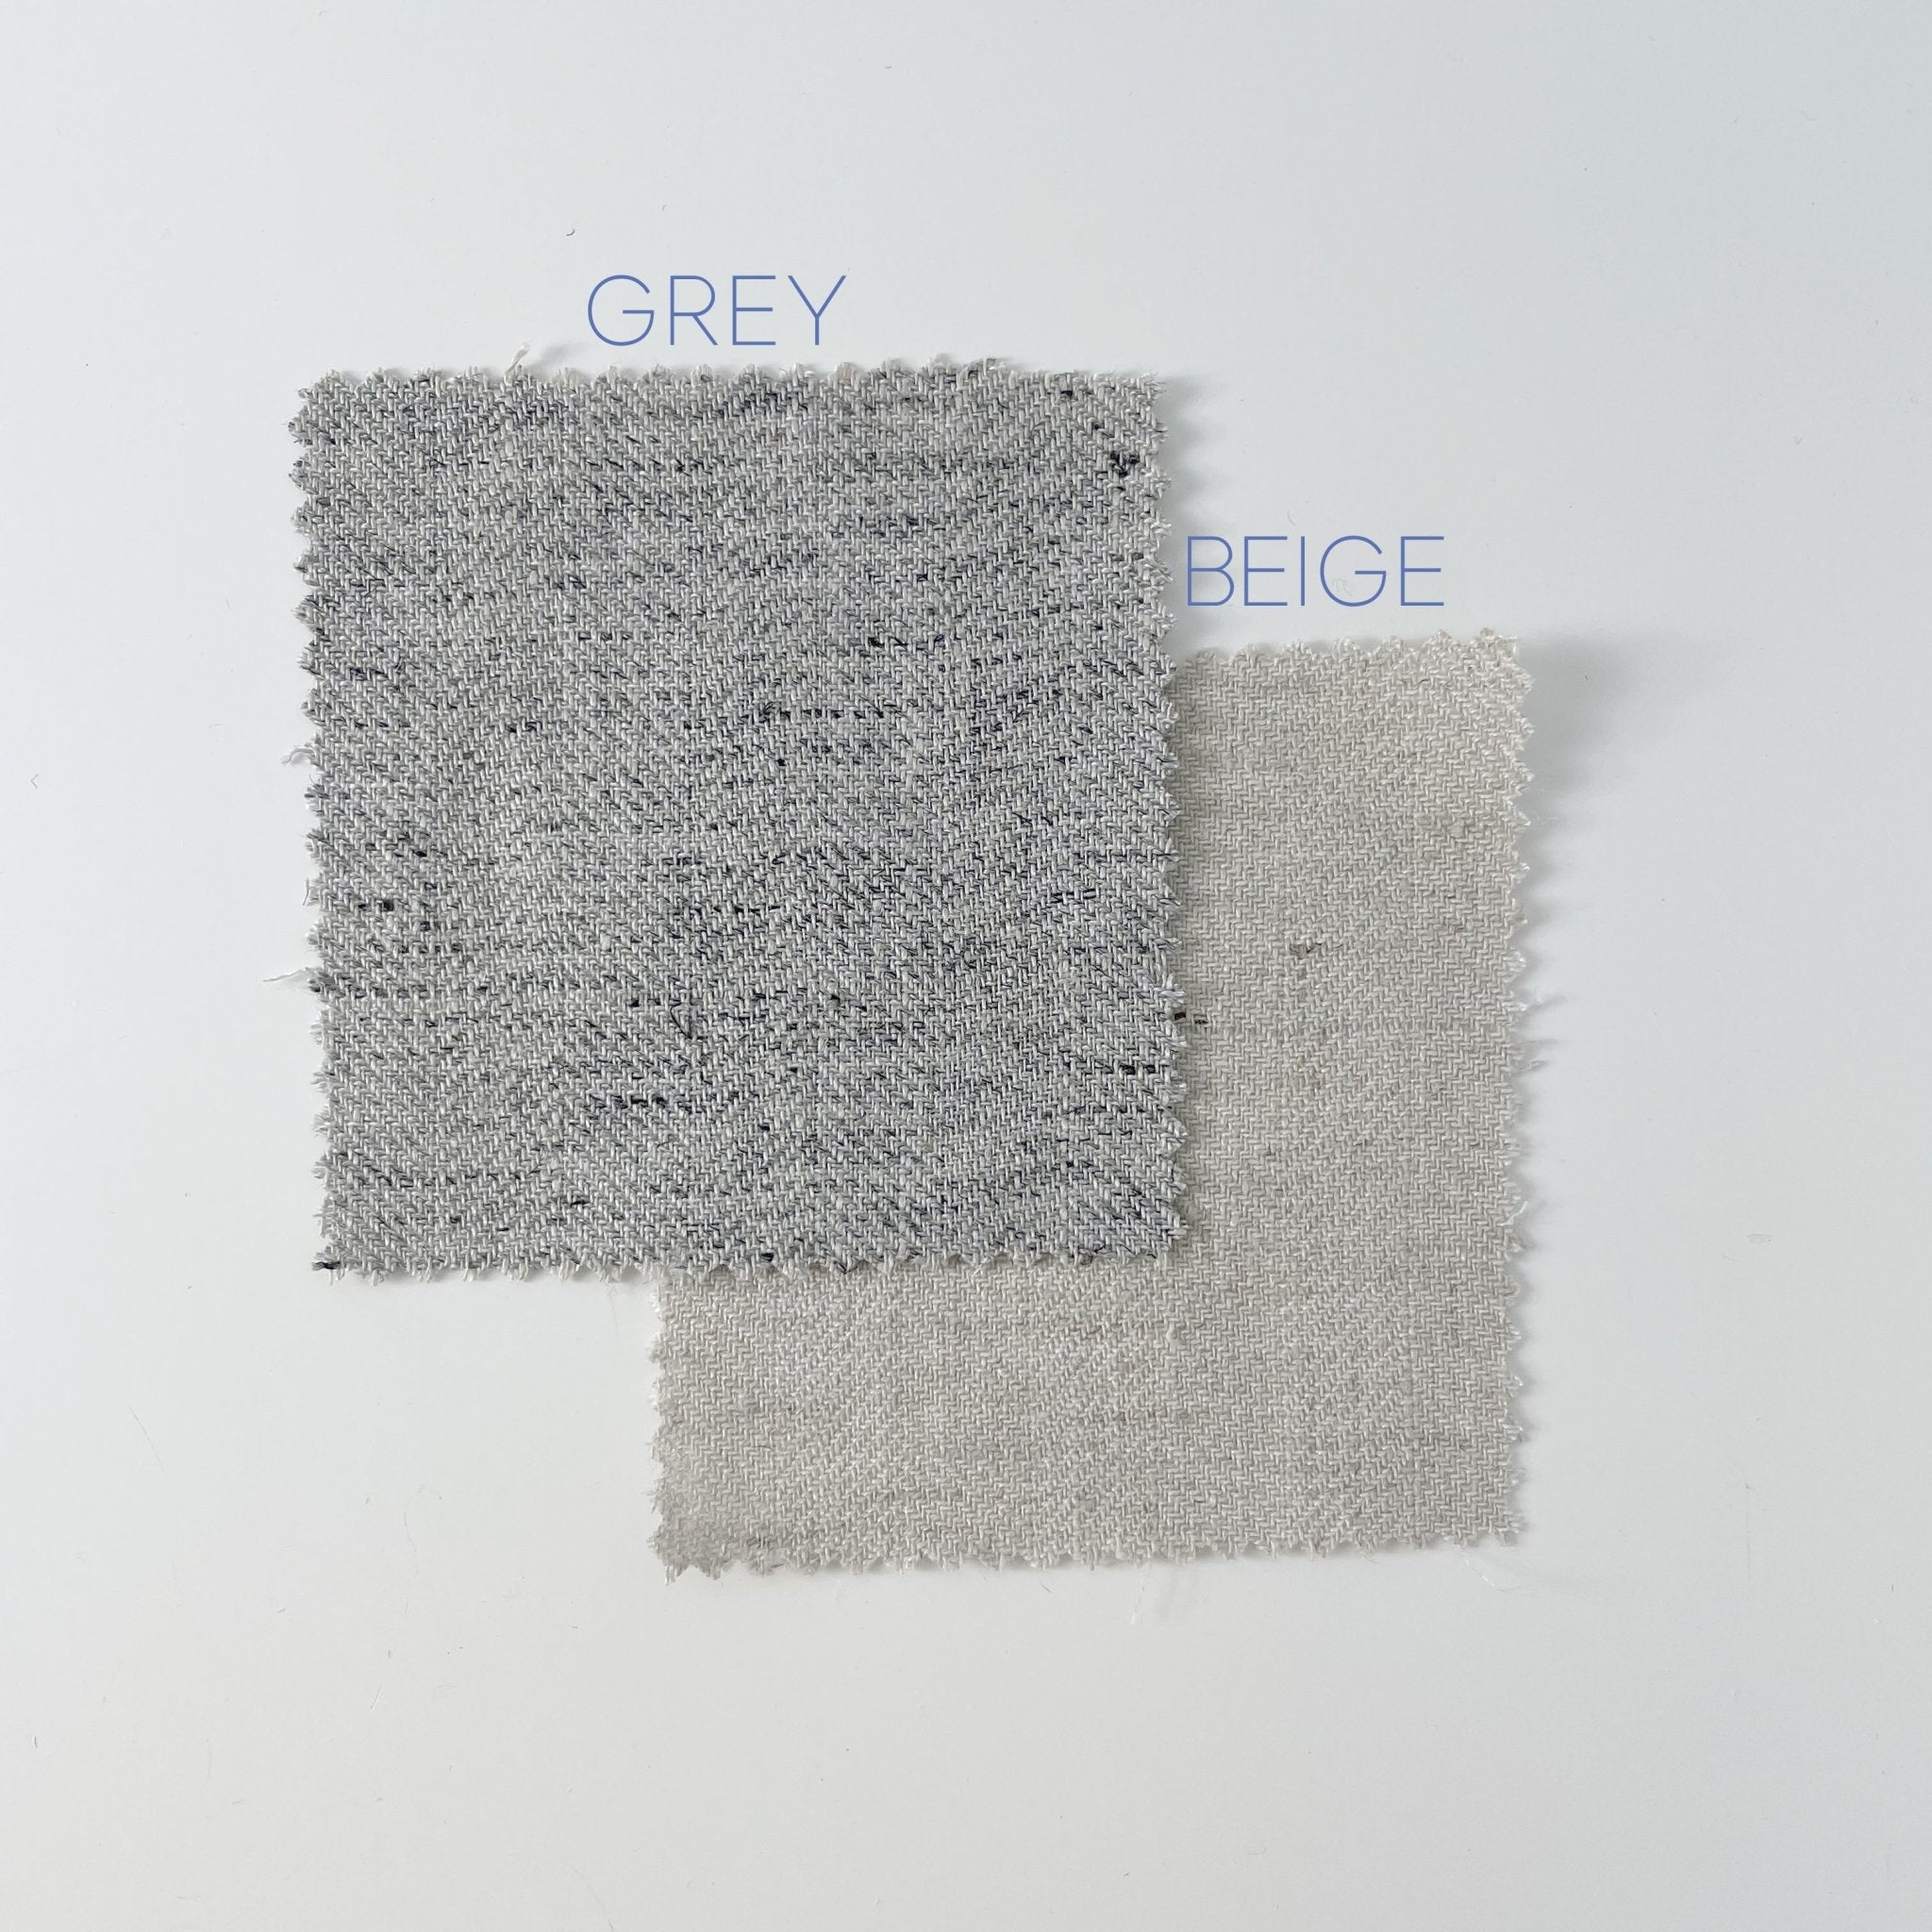 Linen Melange Fabric HBT Herringbone Twill (6667 6668) - The Linen Lab - Light Natural